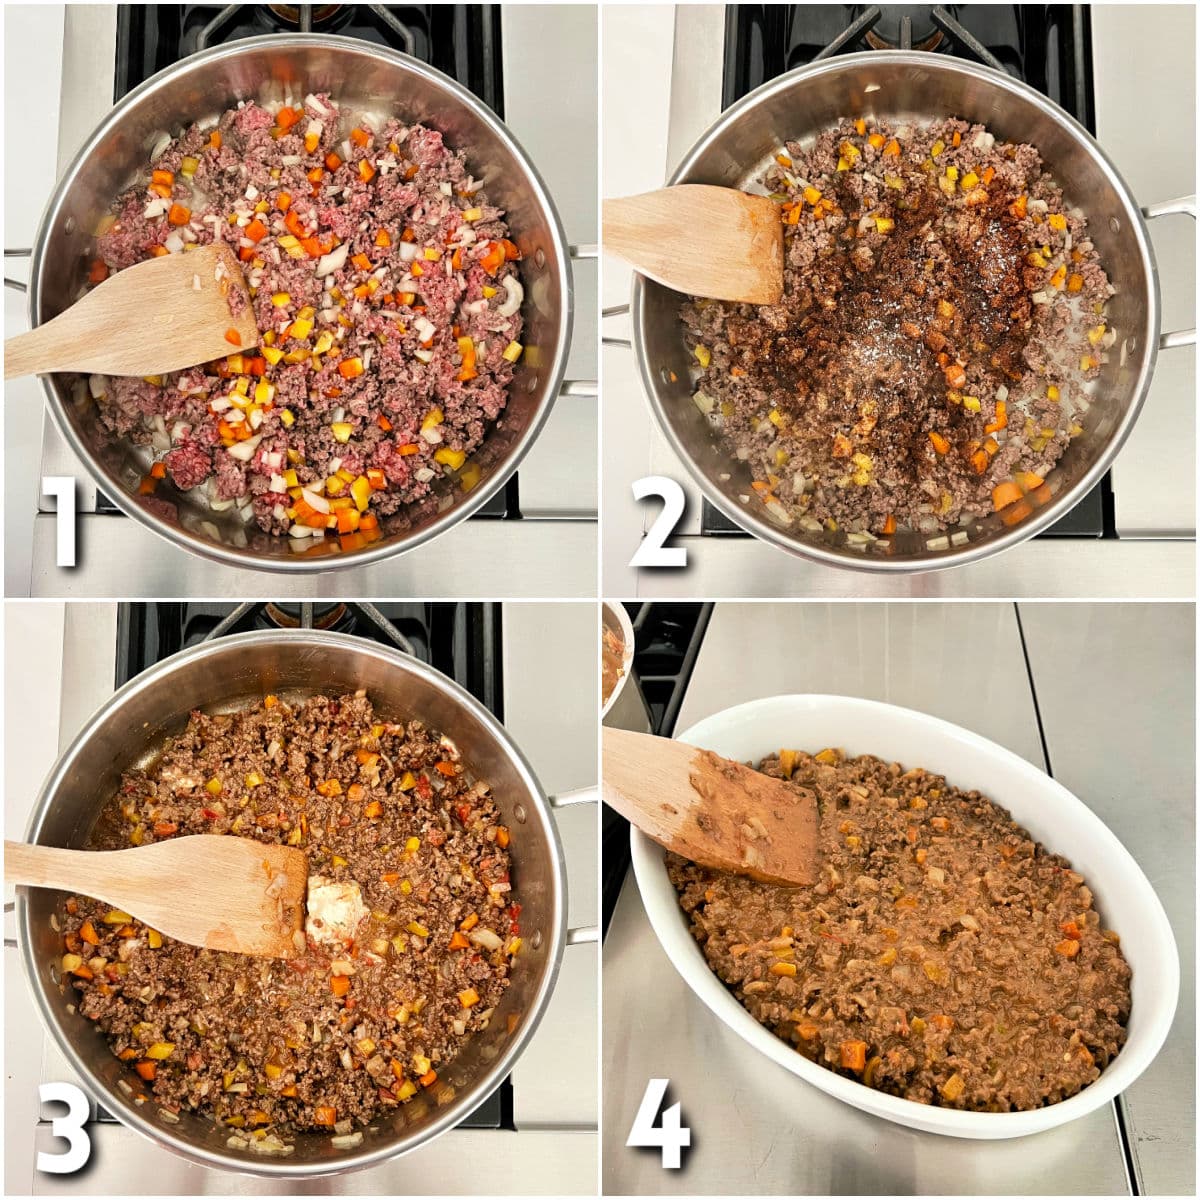 Steps for making easy keto taco casserole.